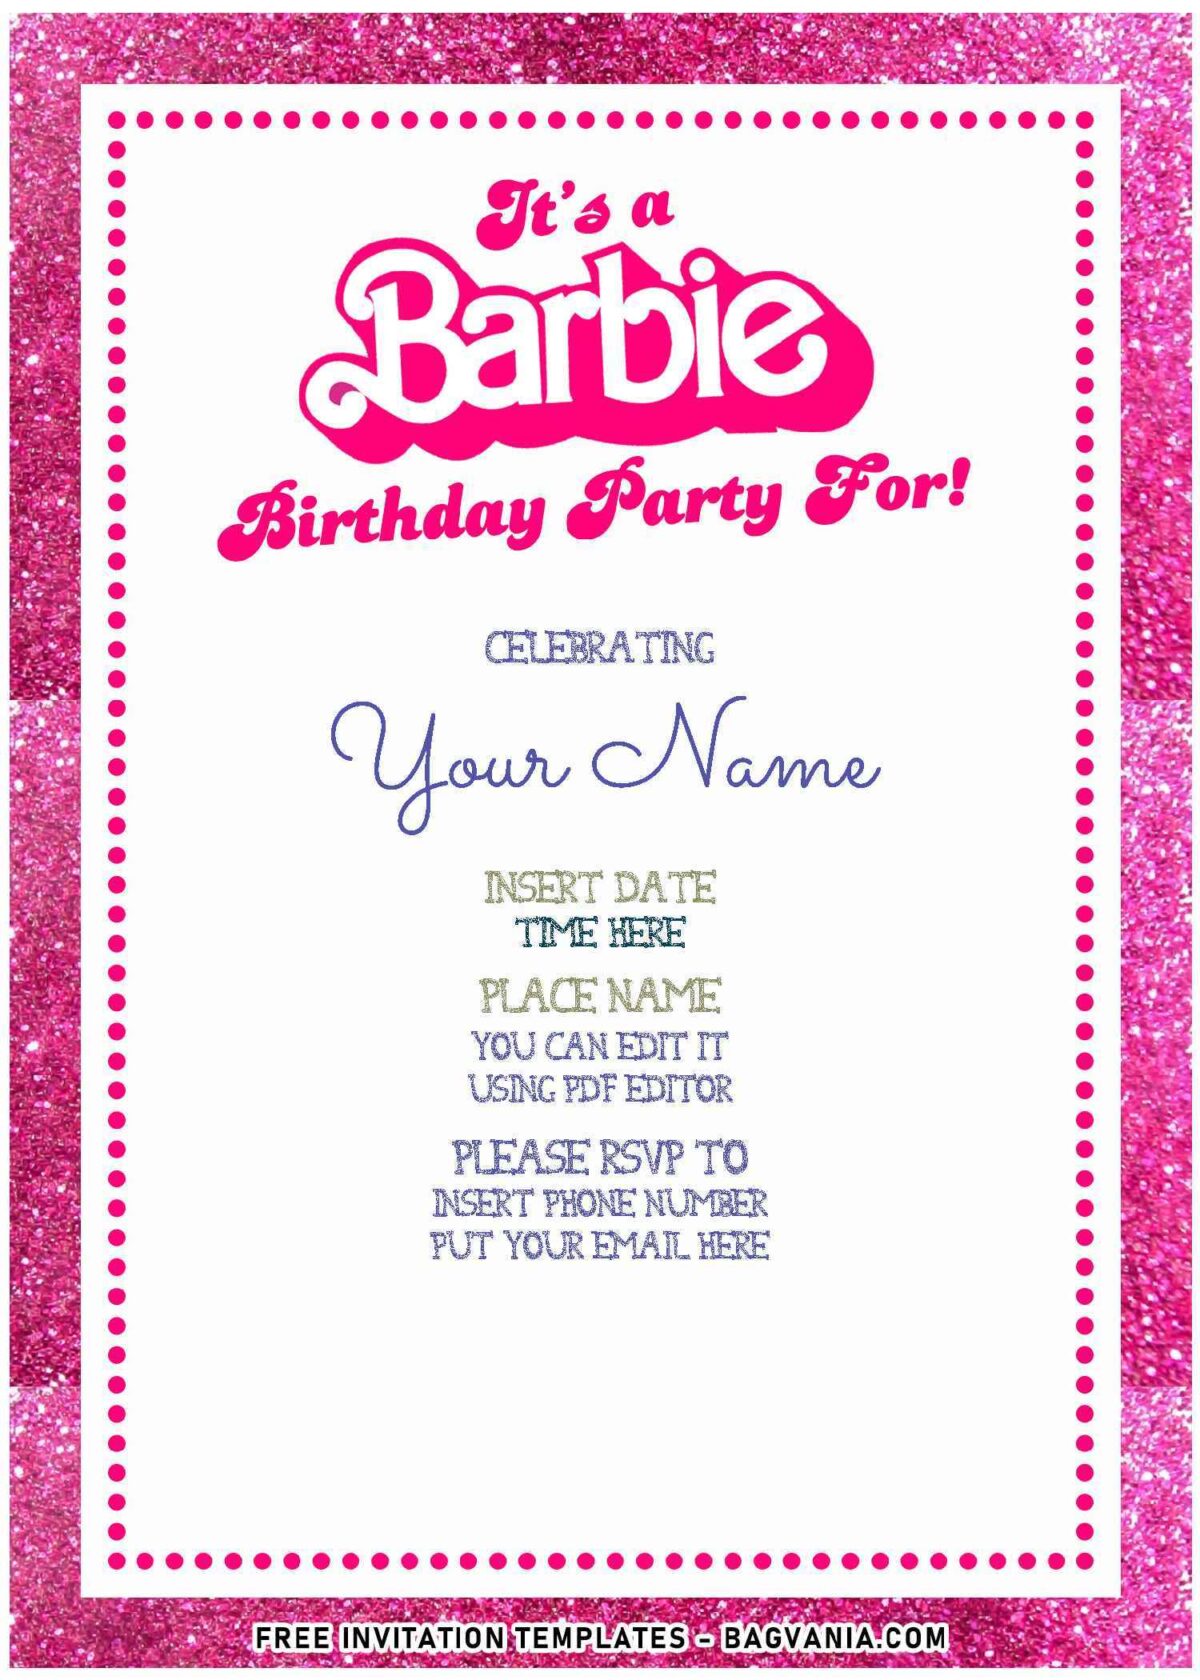 (Free Editable PDF) Cute Glitter Pink Barbie Girls Birthday Invitation Templates with editable text